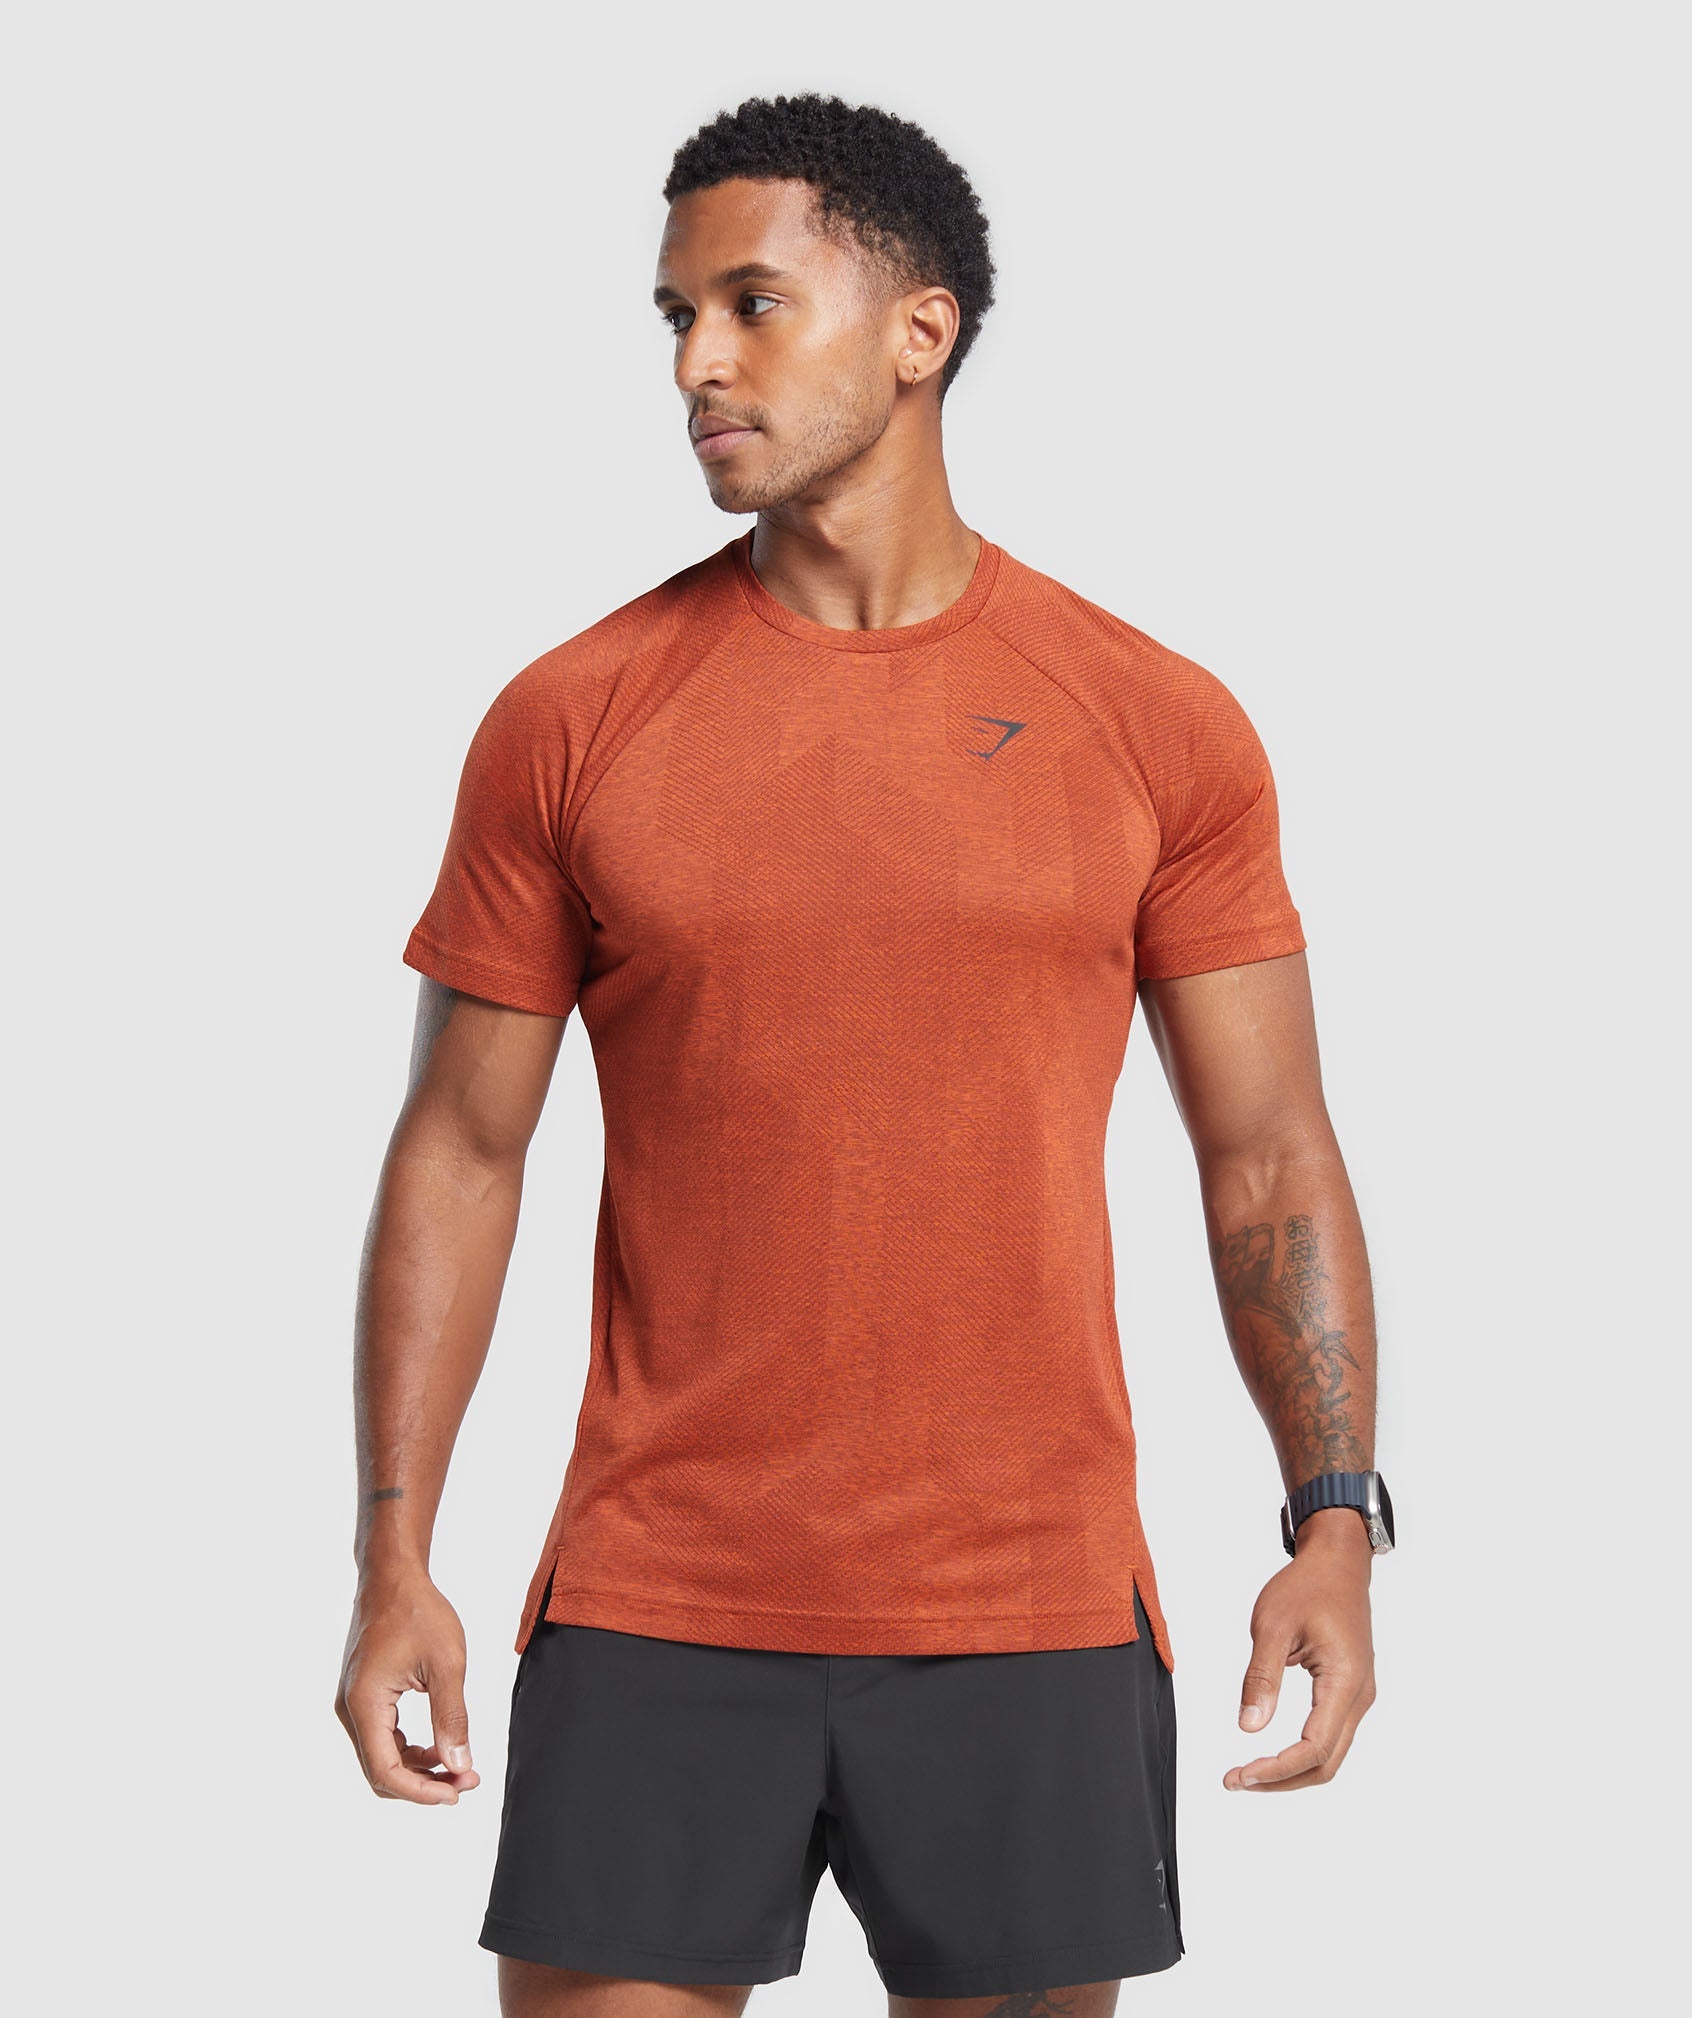 Apex T-Shirt in Rust Orange/Rust Brown - view 1